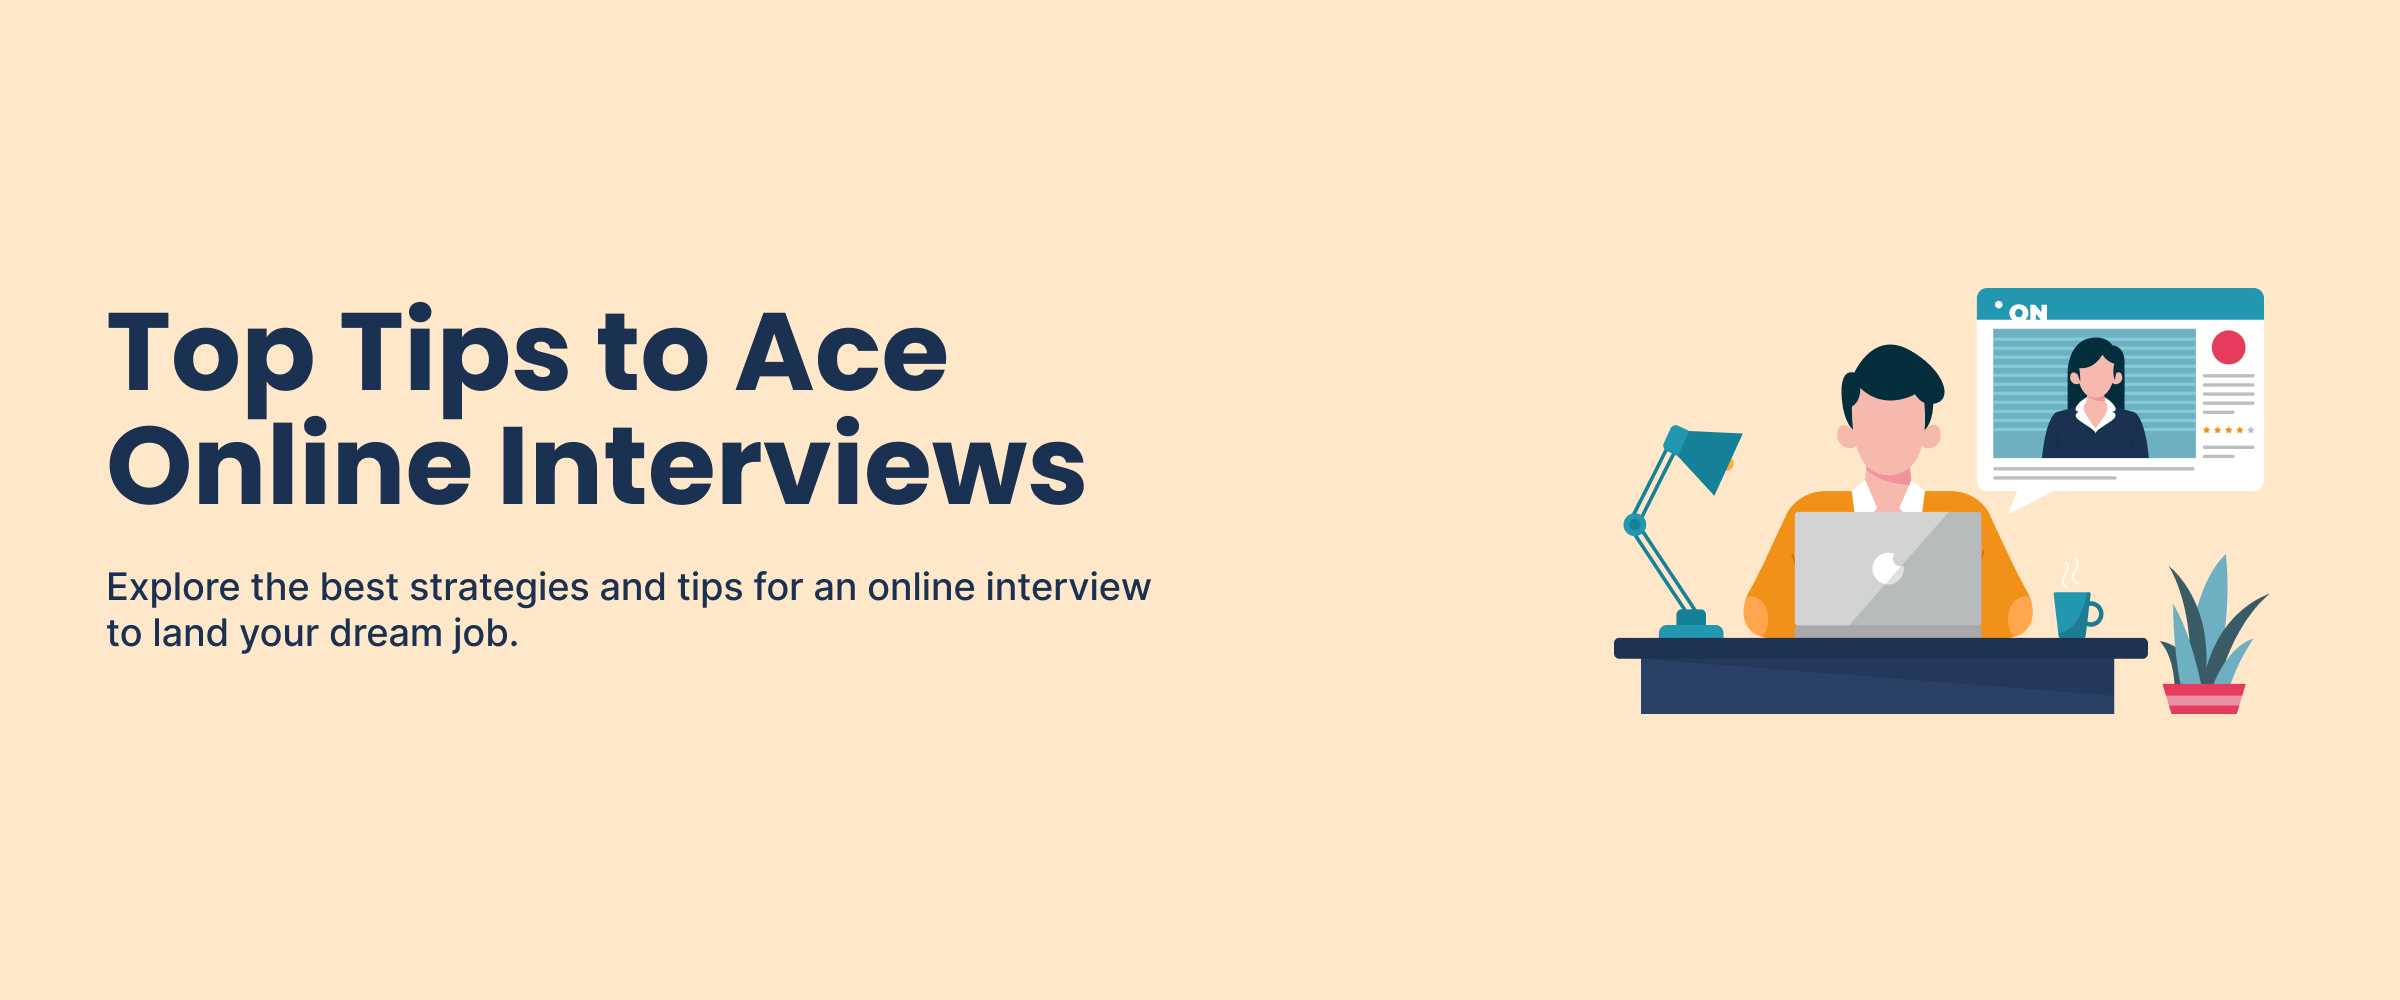 Online Interviews Tips